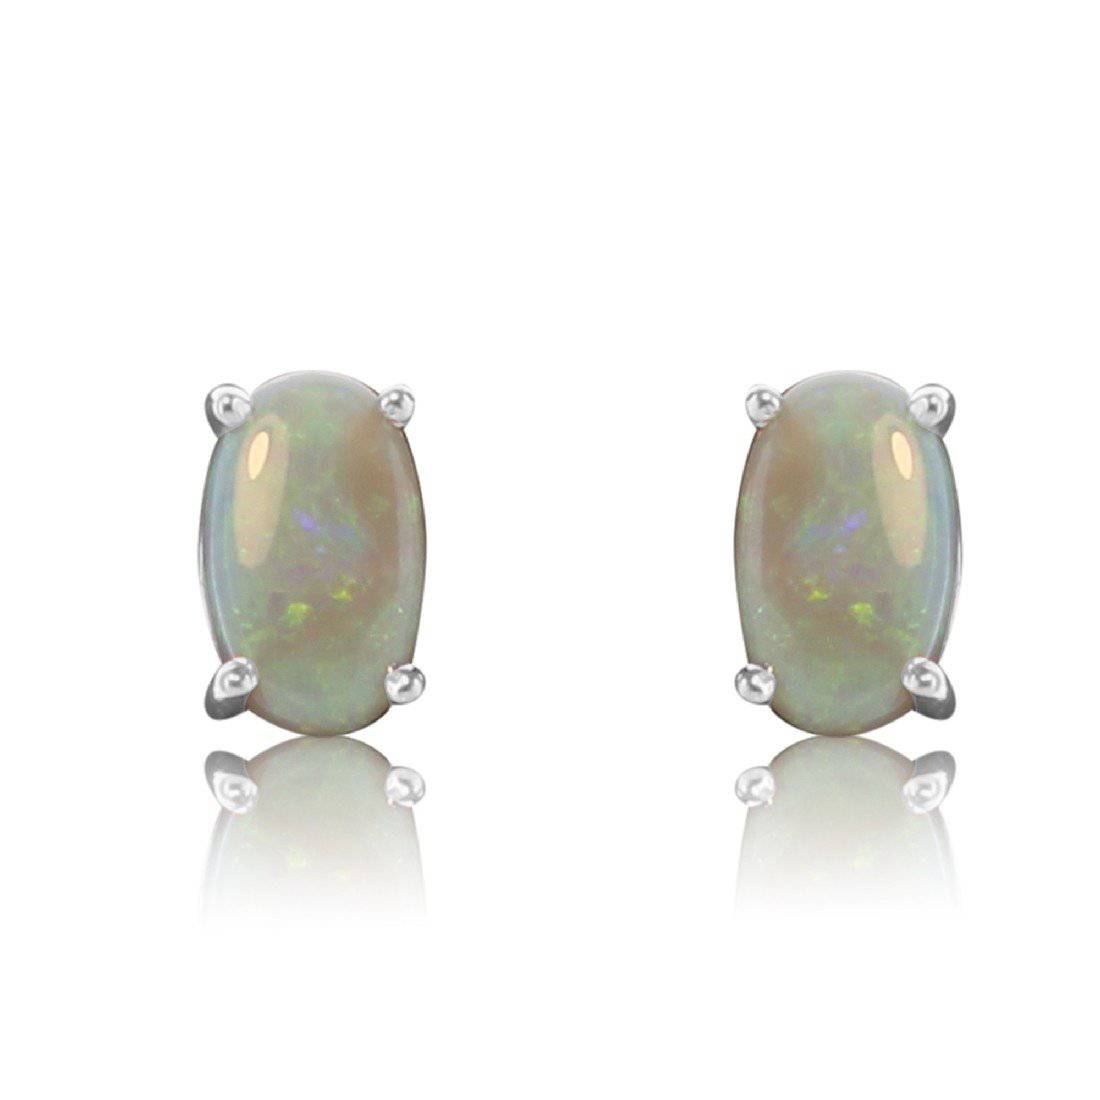 9kt White Gold Opal studs 2.26ct - Masterpiece Jewellery Opal & Gems Sydney Australia | Online Shop